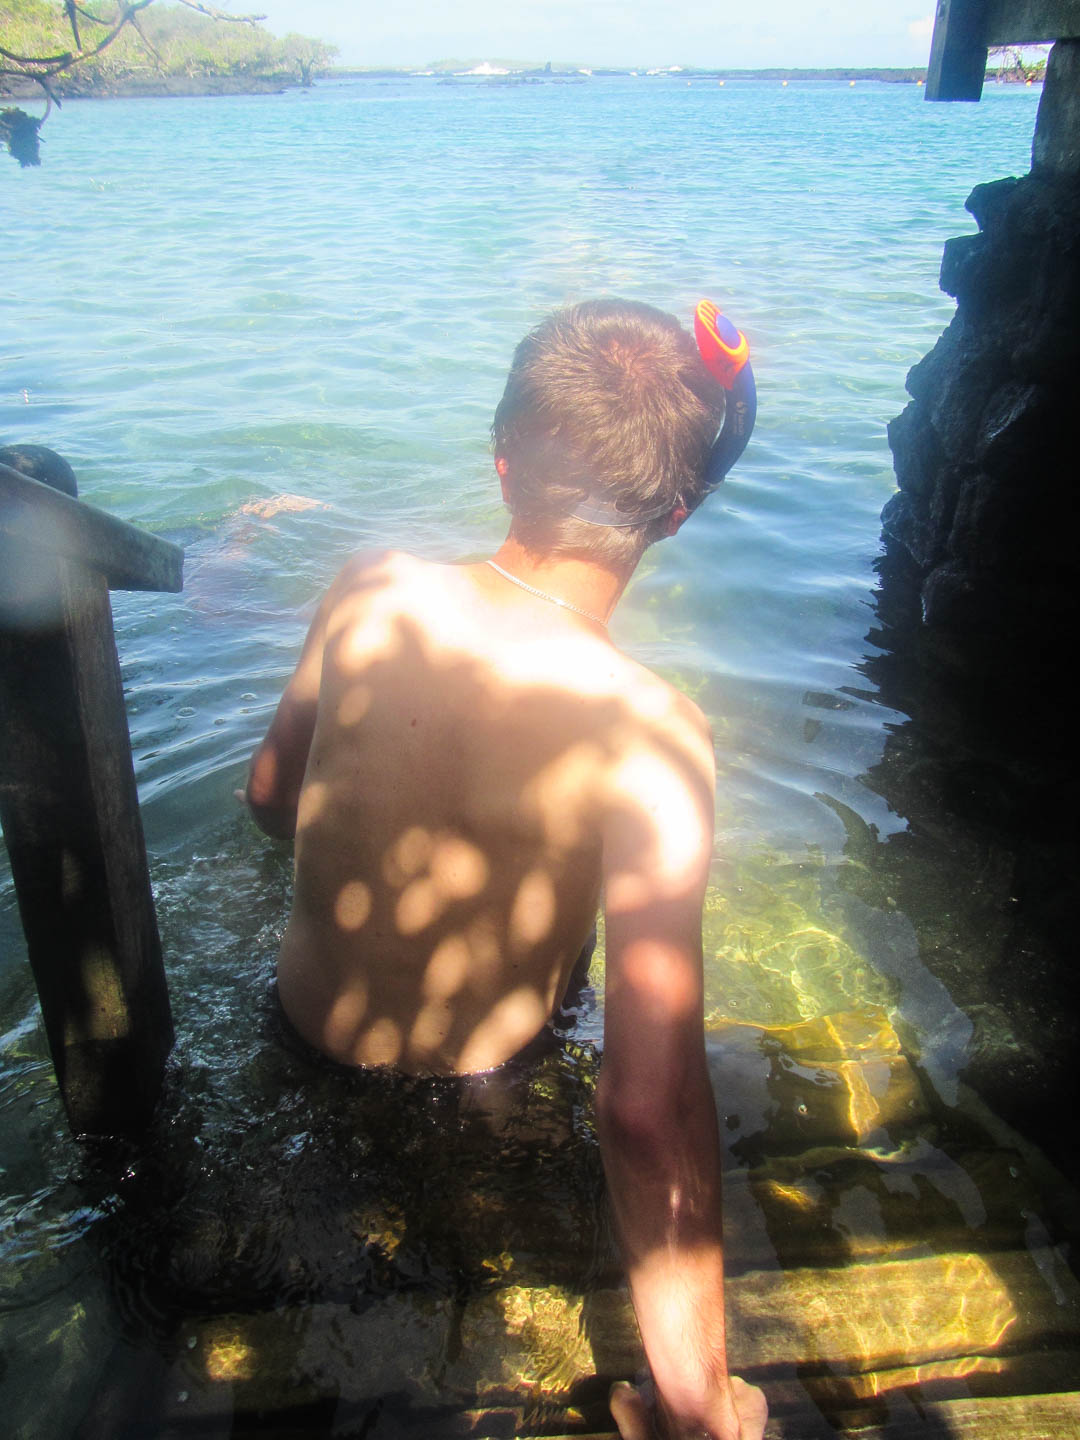 menossa snorklaamaan Isabela-saarella Galapagossaarella